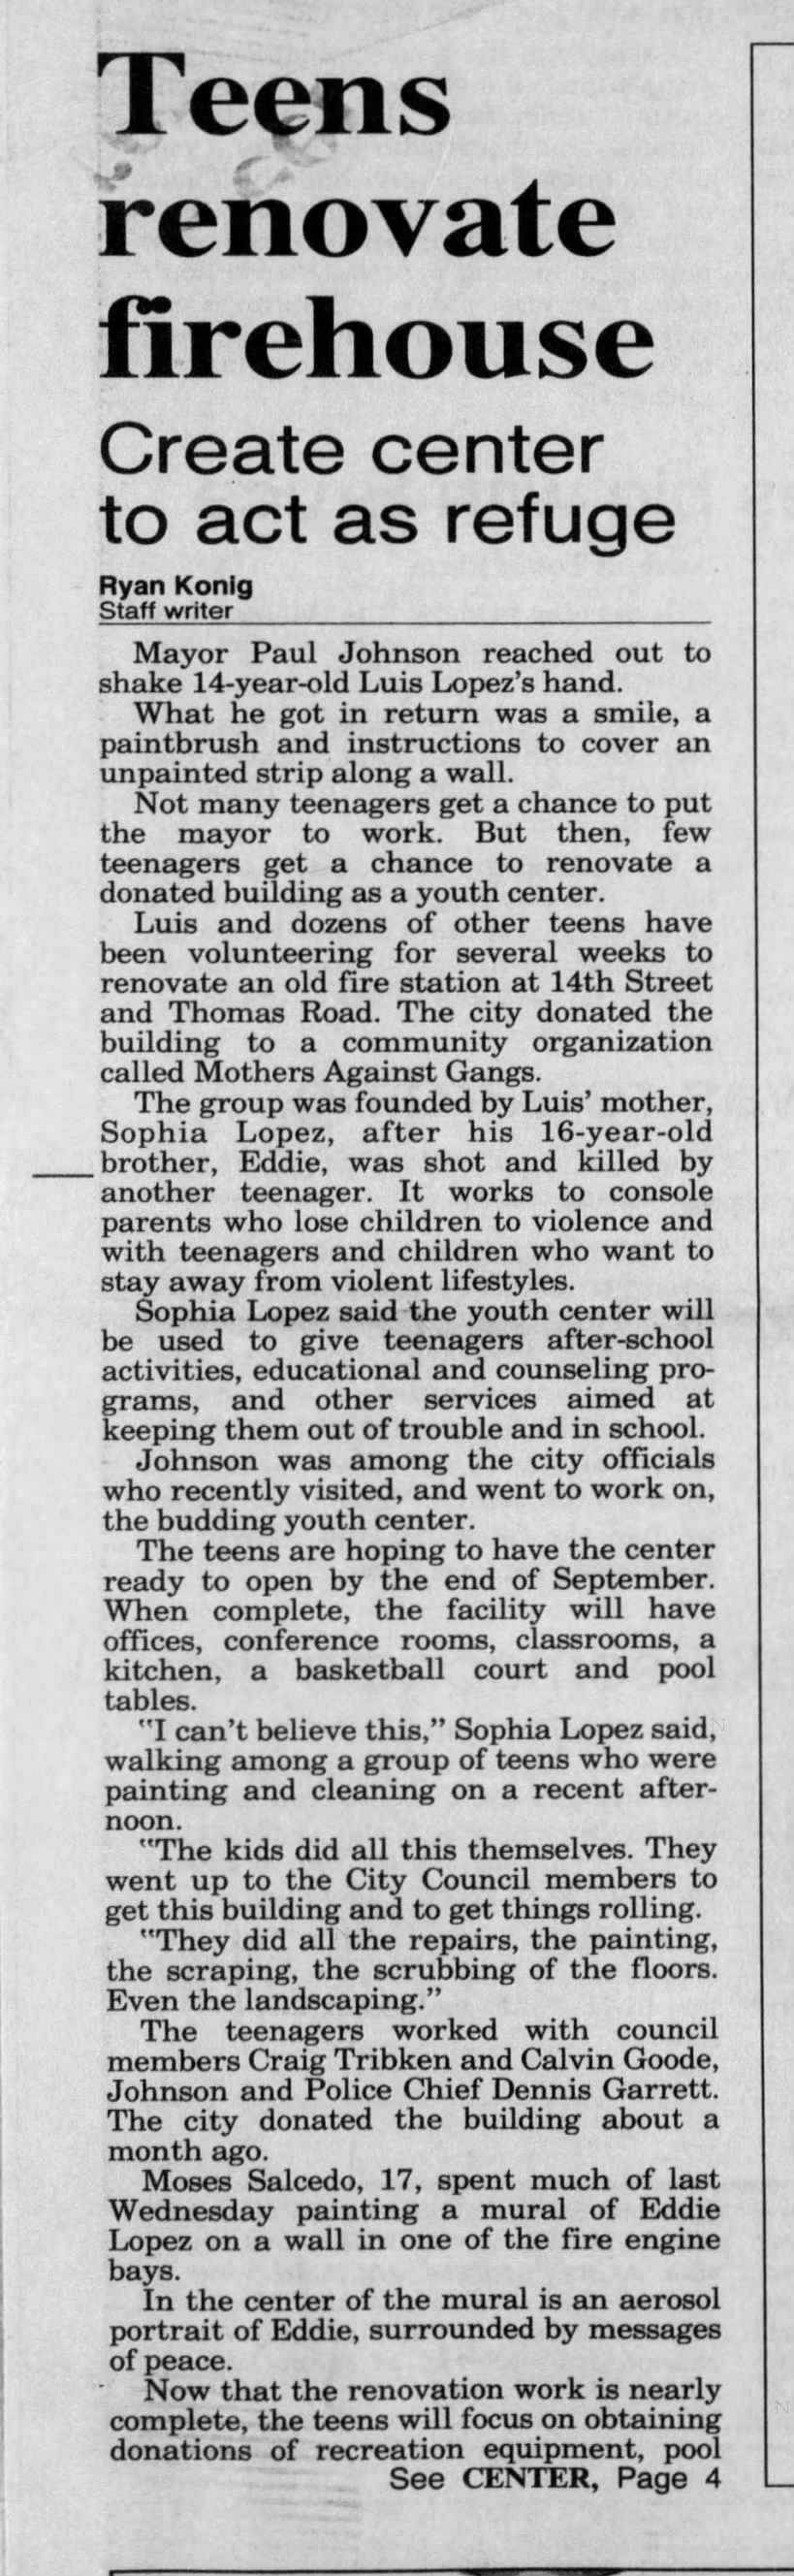 "Teen renovate firehouse" (Sep 01, 1993)